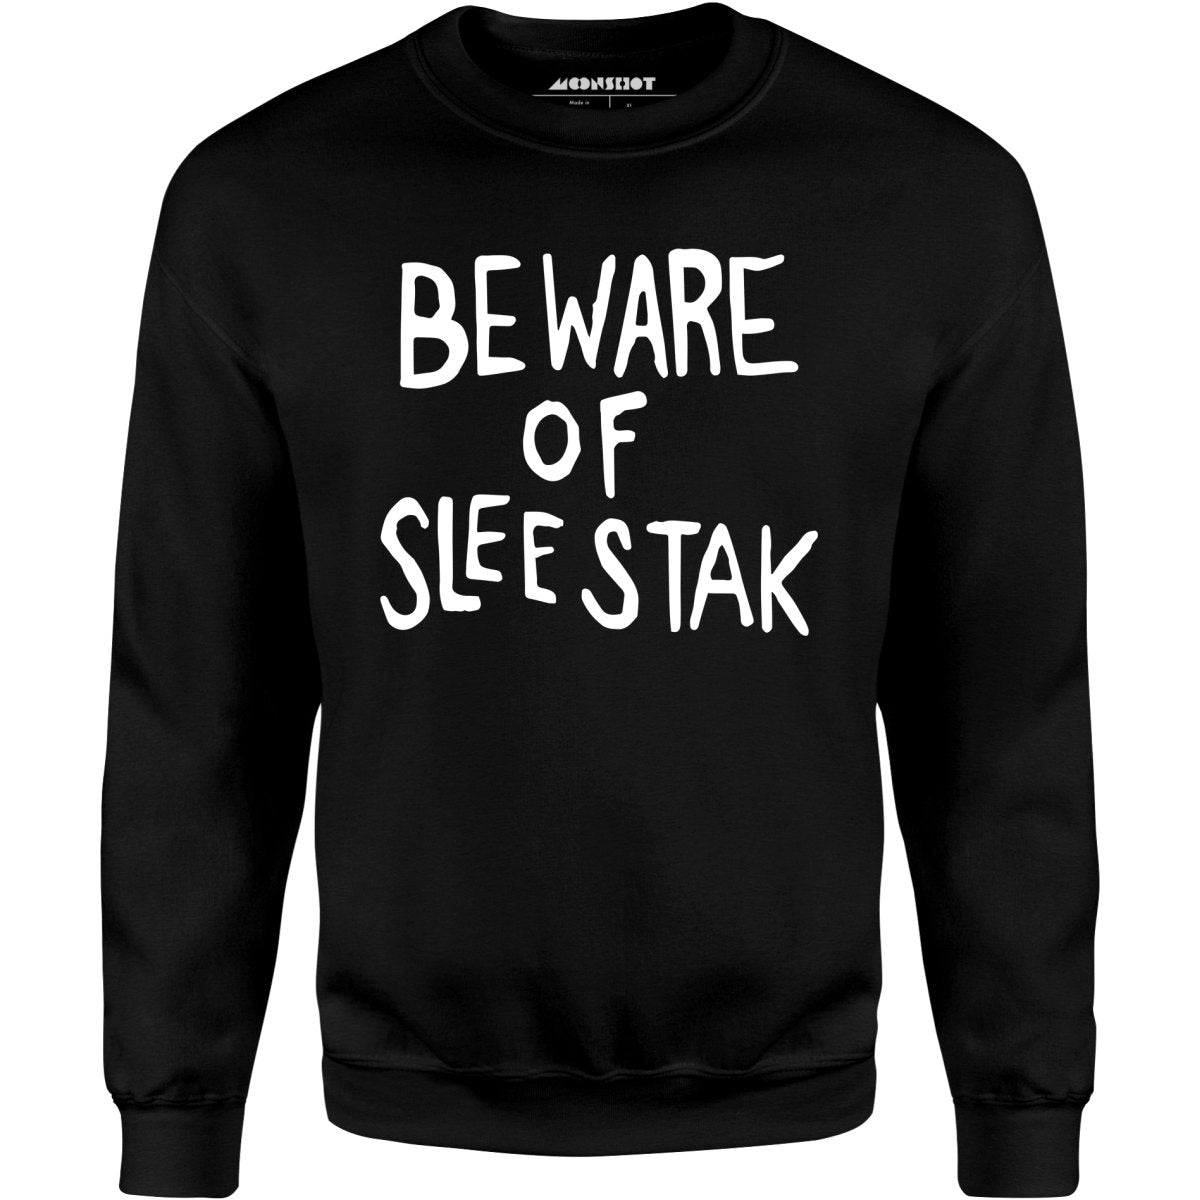 Beware of Sleestak - Unisex Sweatshirt